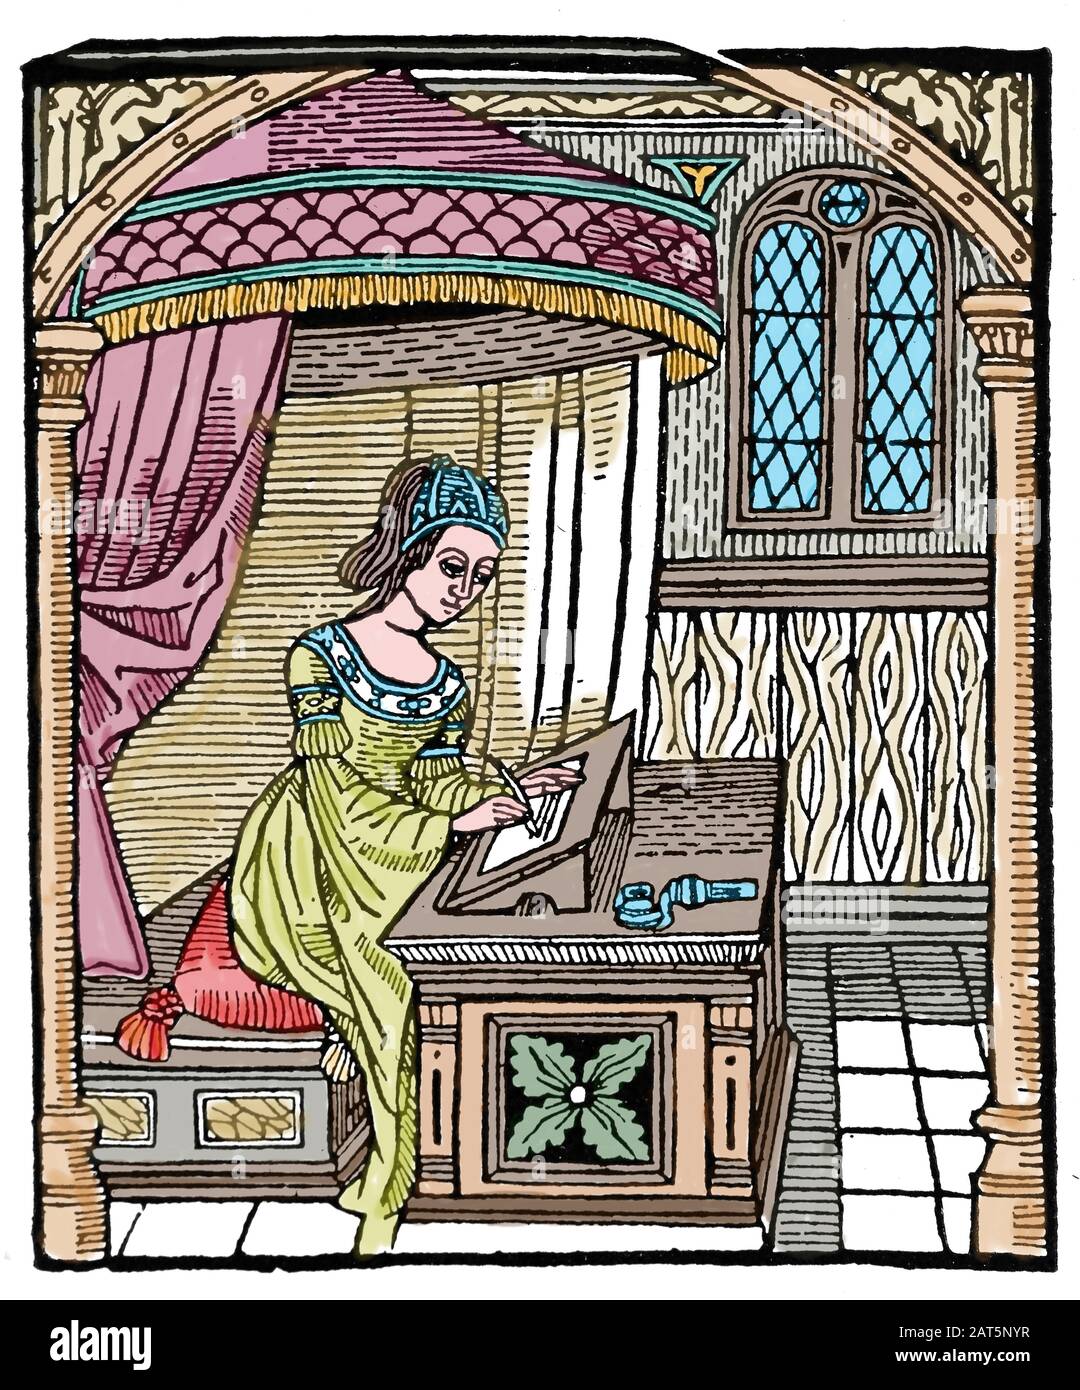 Diego de San Pedro (1437-1498). Castilian writer.  Prison of Love, 1492. Princess Laureola writing a letter. Engraving. Stock Photo